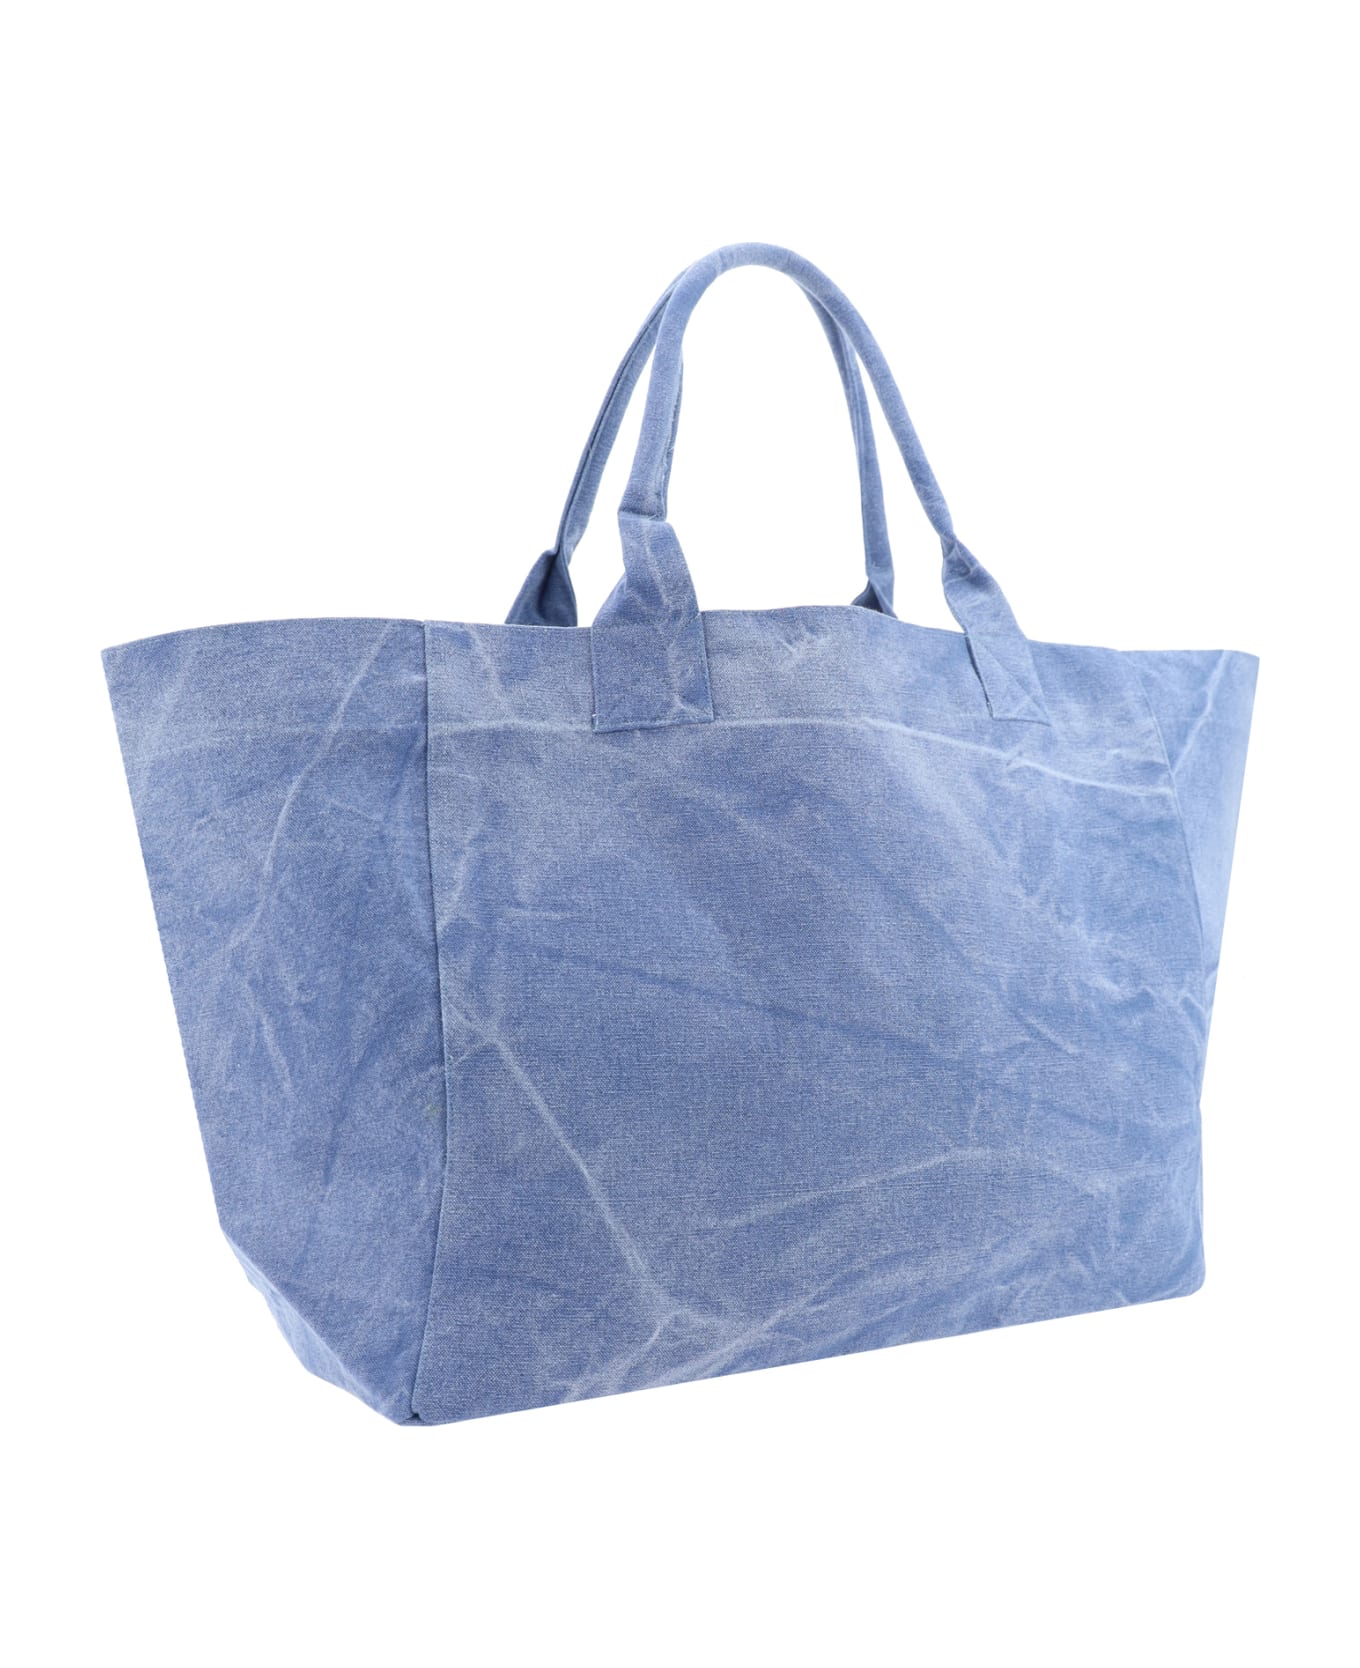 Ganni Handbag - Light Blue Vintage